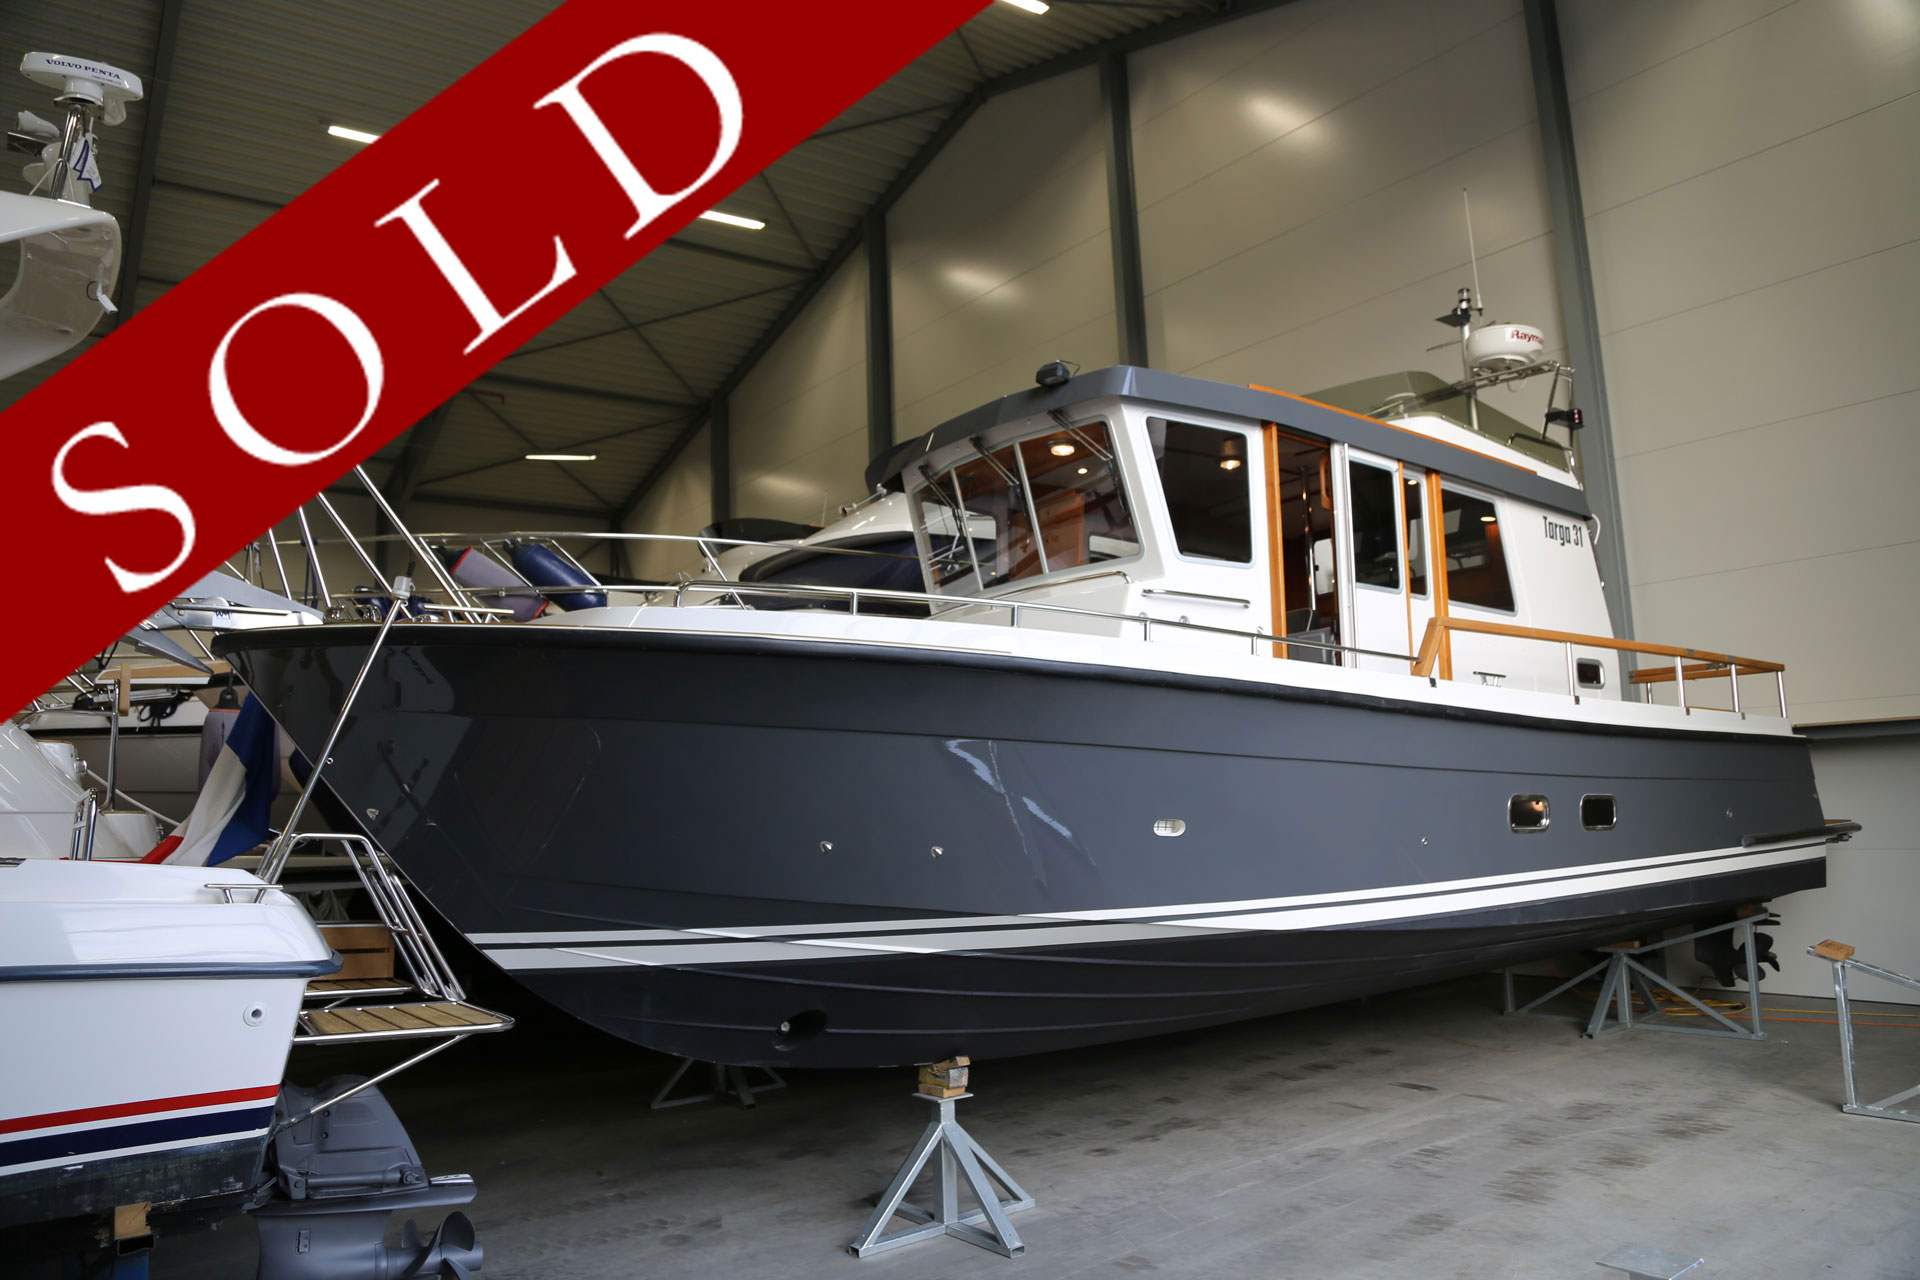 Targa 31 sold – other Targa boats are wanted